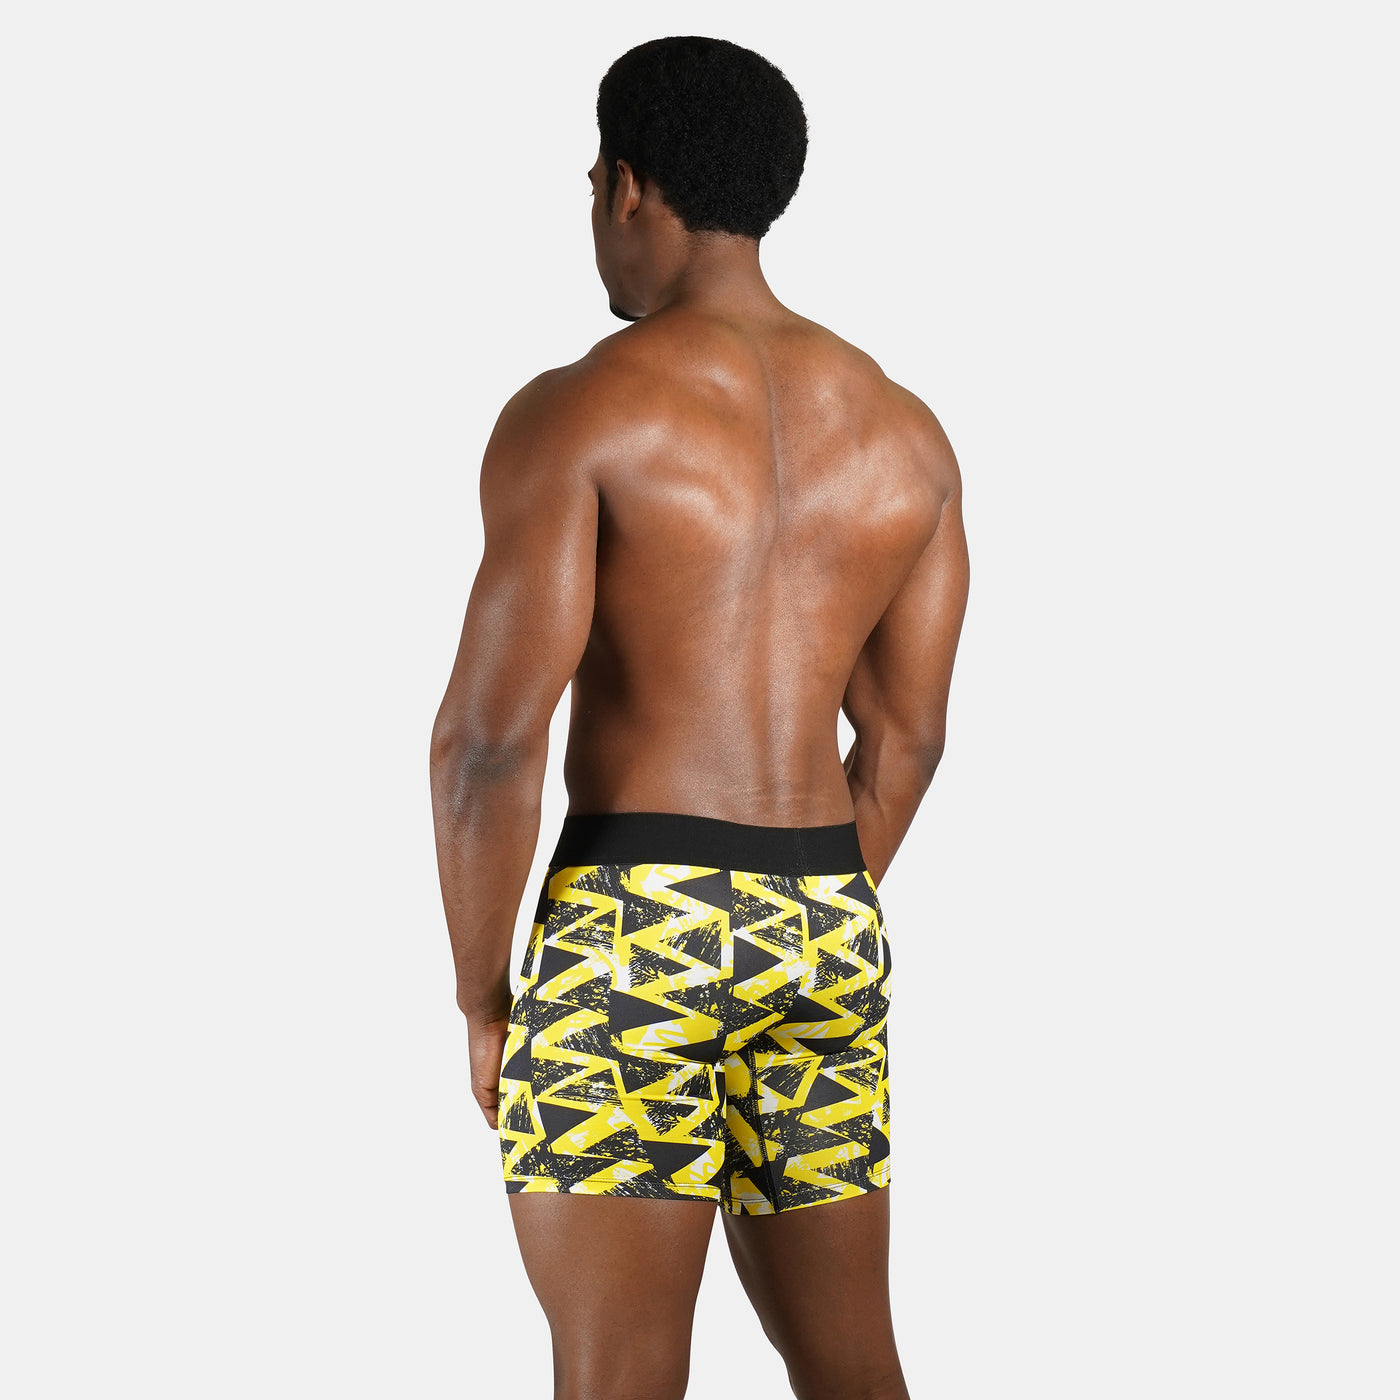 Symmetrical Black Yellow Men's Underwear